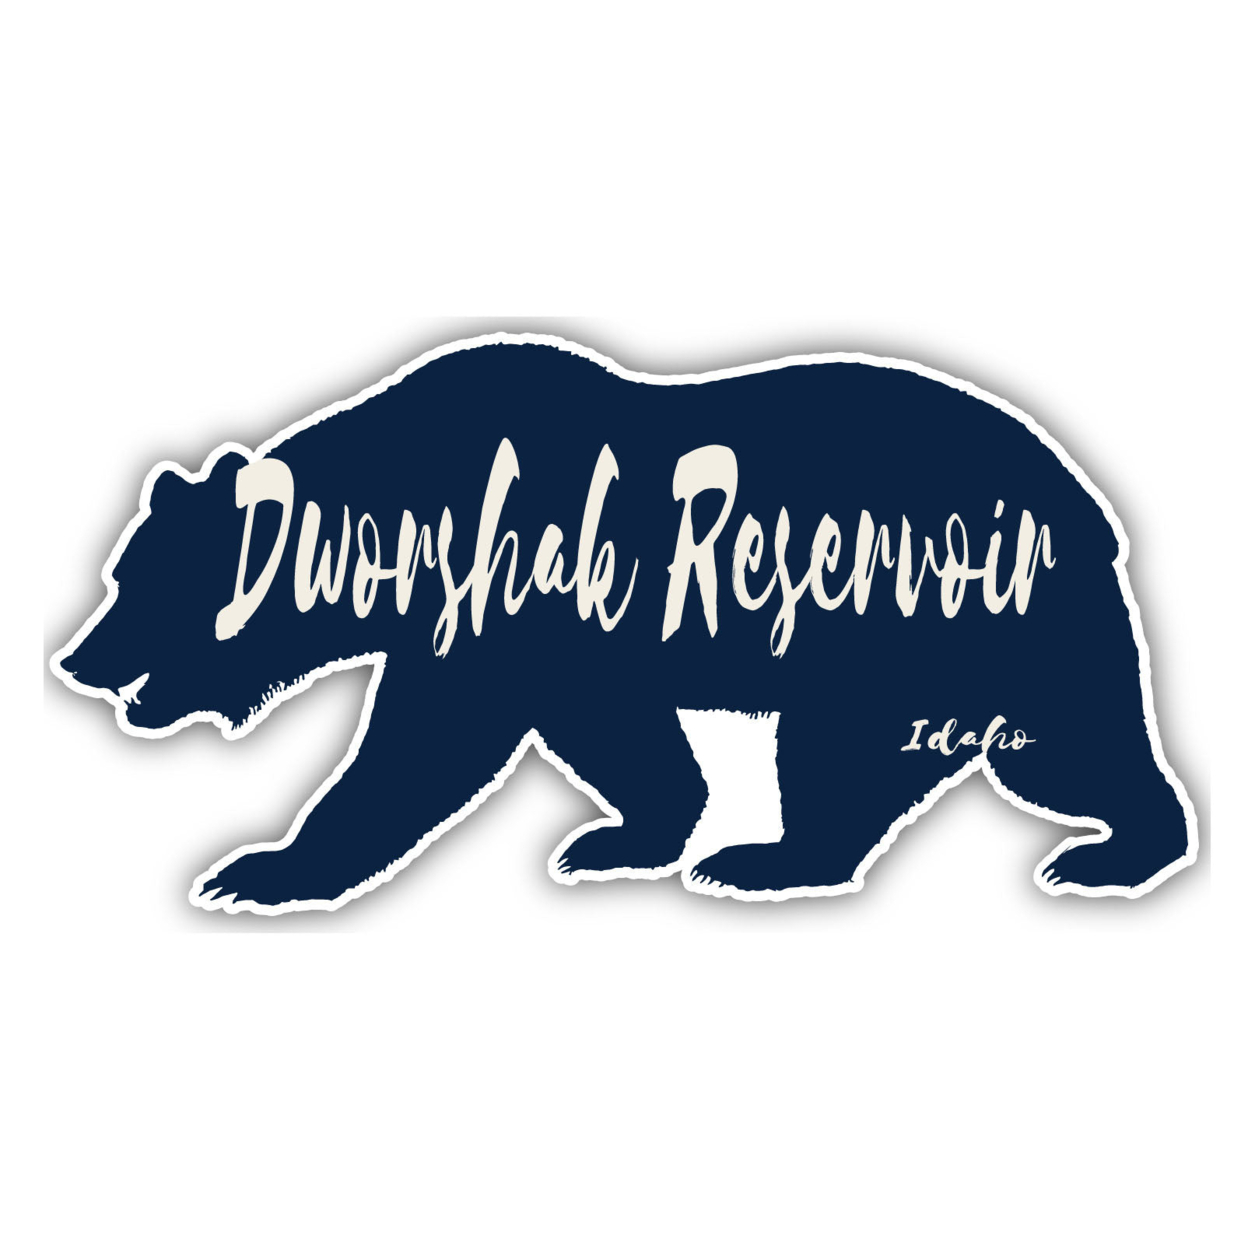 Dworshak Reservoir Idaho Souvenir Decorative Stickers (Choose Theme And Size) - 4-Pack, 4-Inch, Camp Life